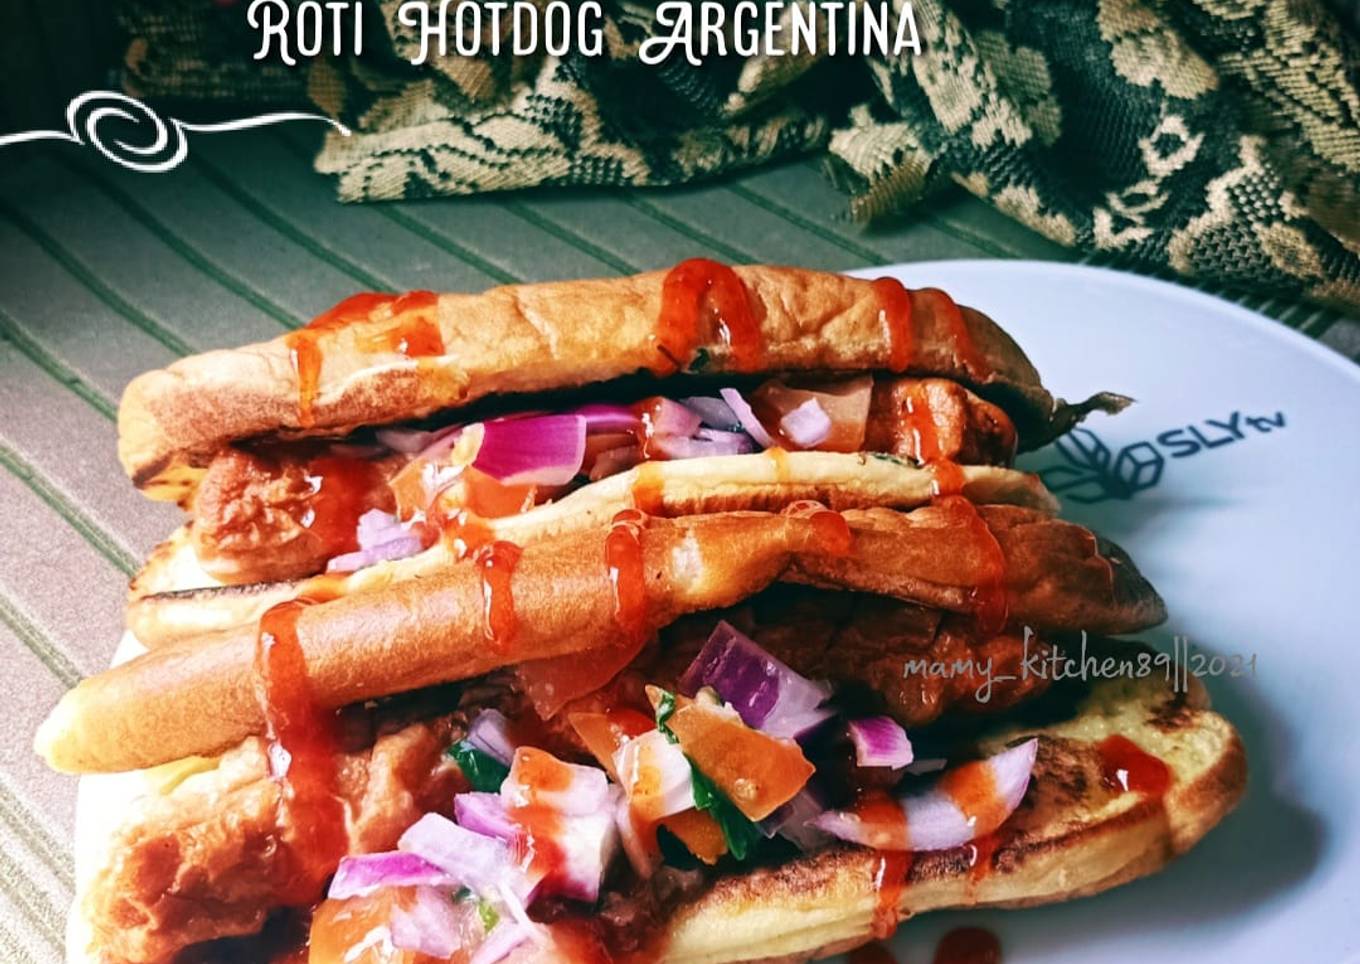 🇦🇷 Argentine Choripan / Roti Hotdog Argentina